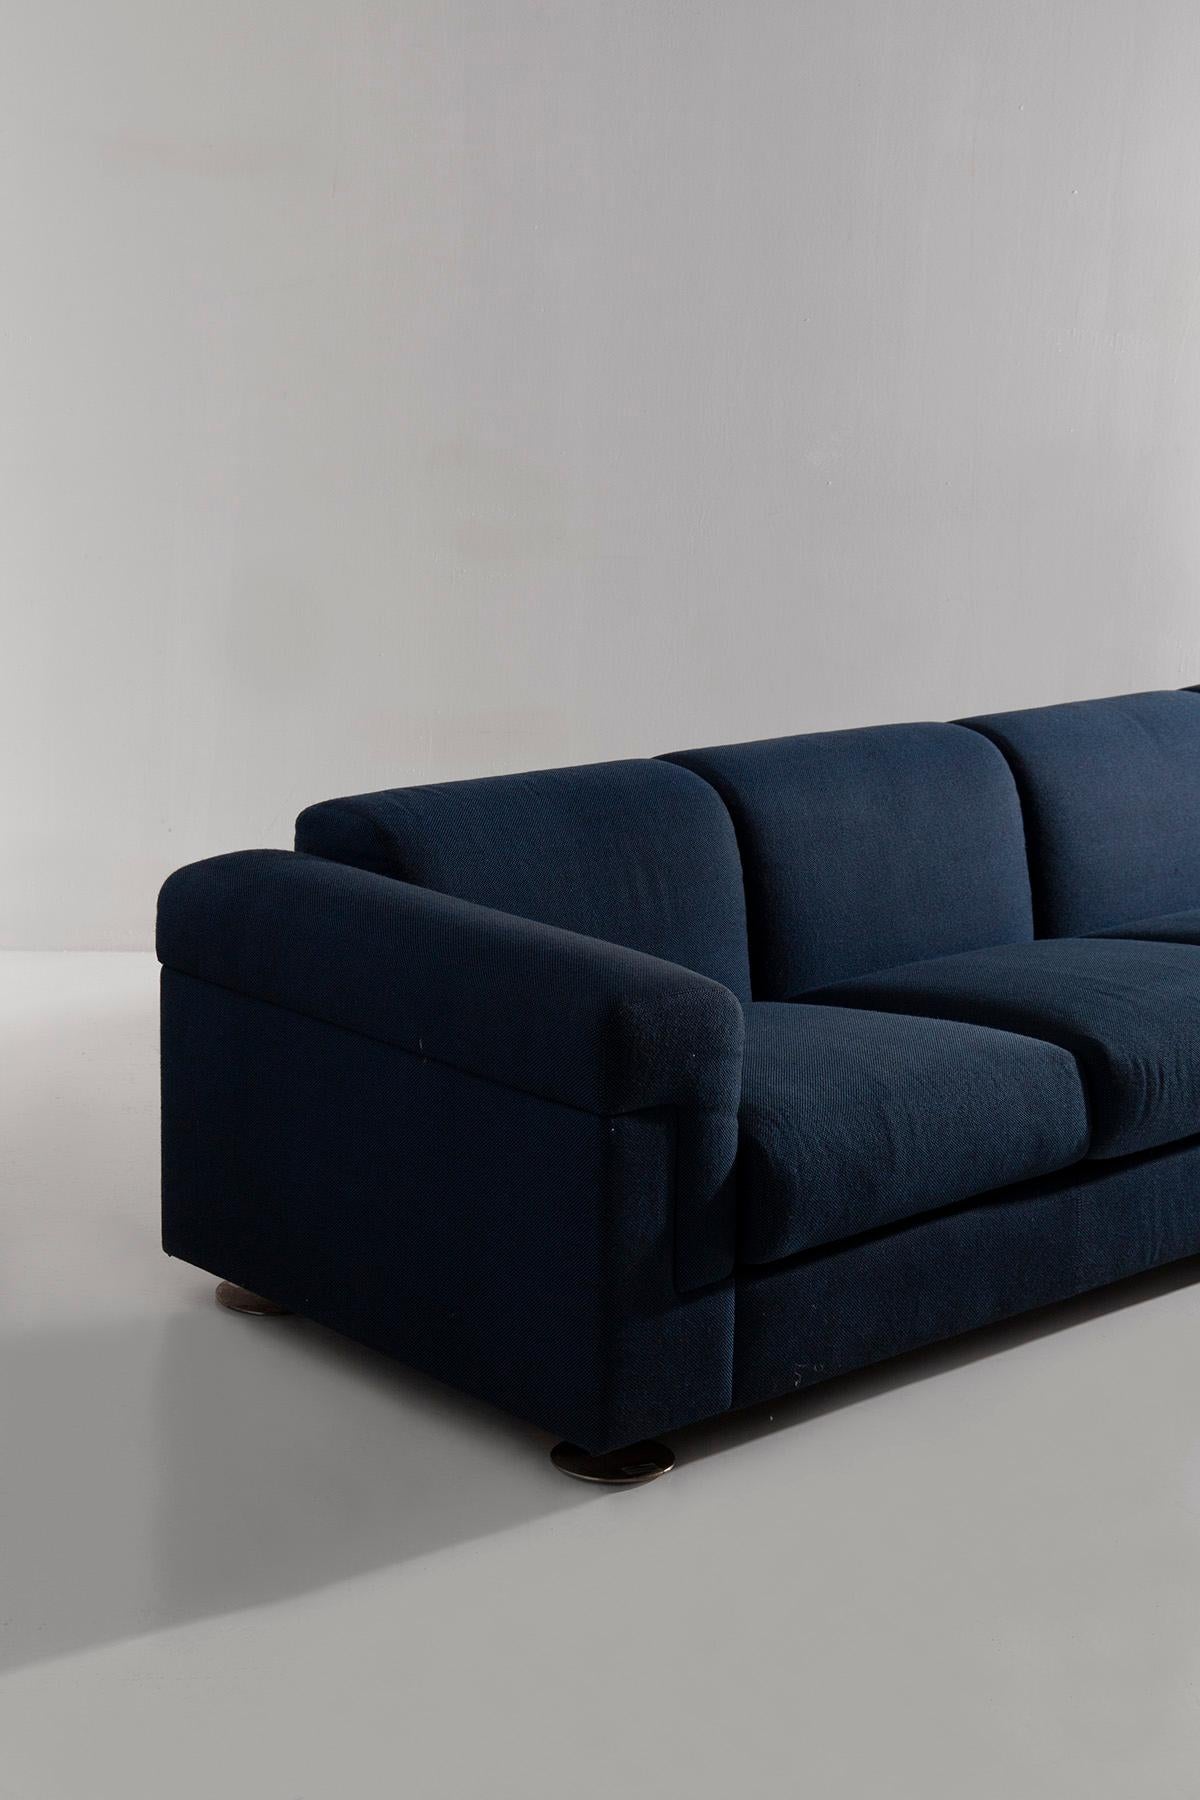 Sofa Mod. D120 by V. Borsani and A. Bonetti prod. Tecno In Good Condition For Sale In Milano, IT